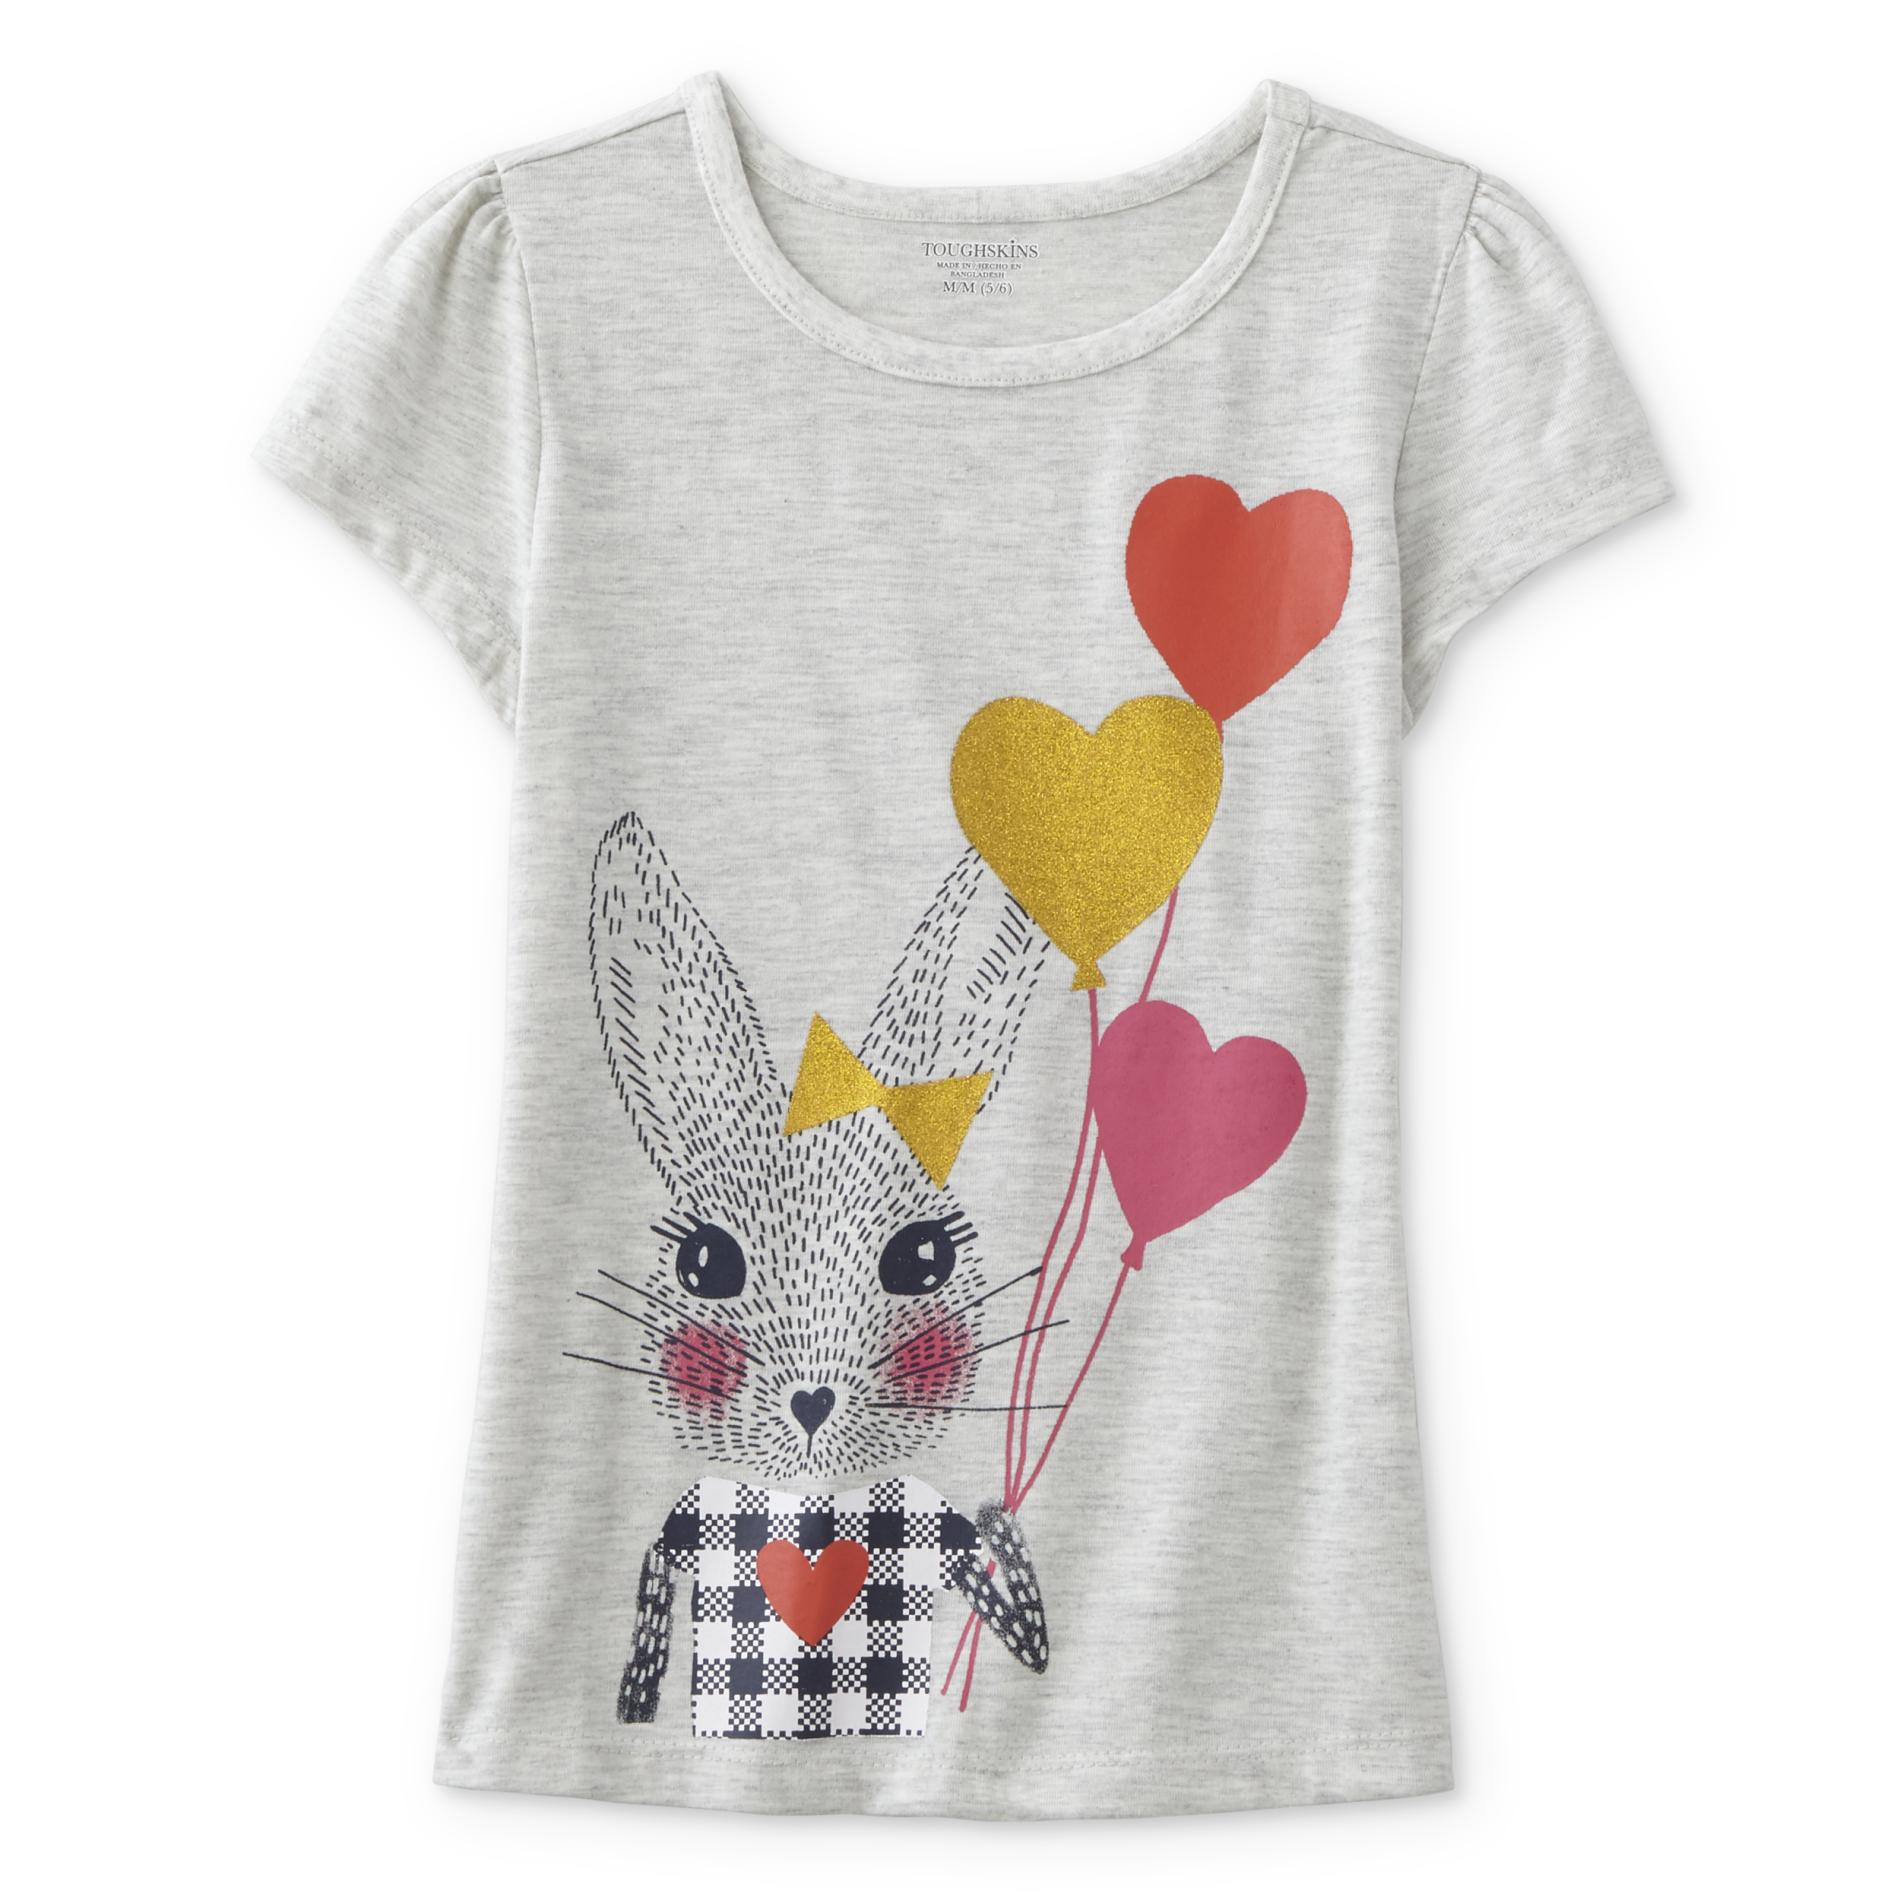 Toughskins Toddler Girls' Graphic T-Shirt - Bunny